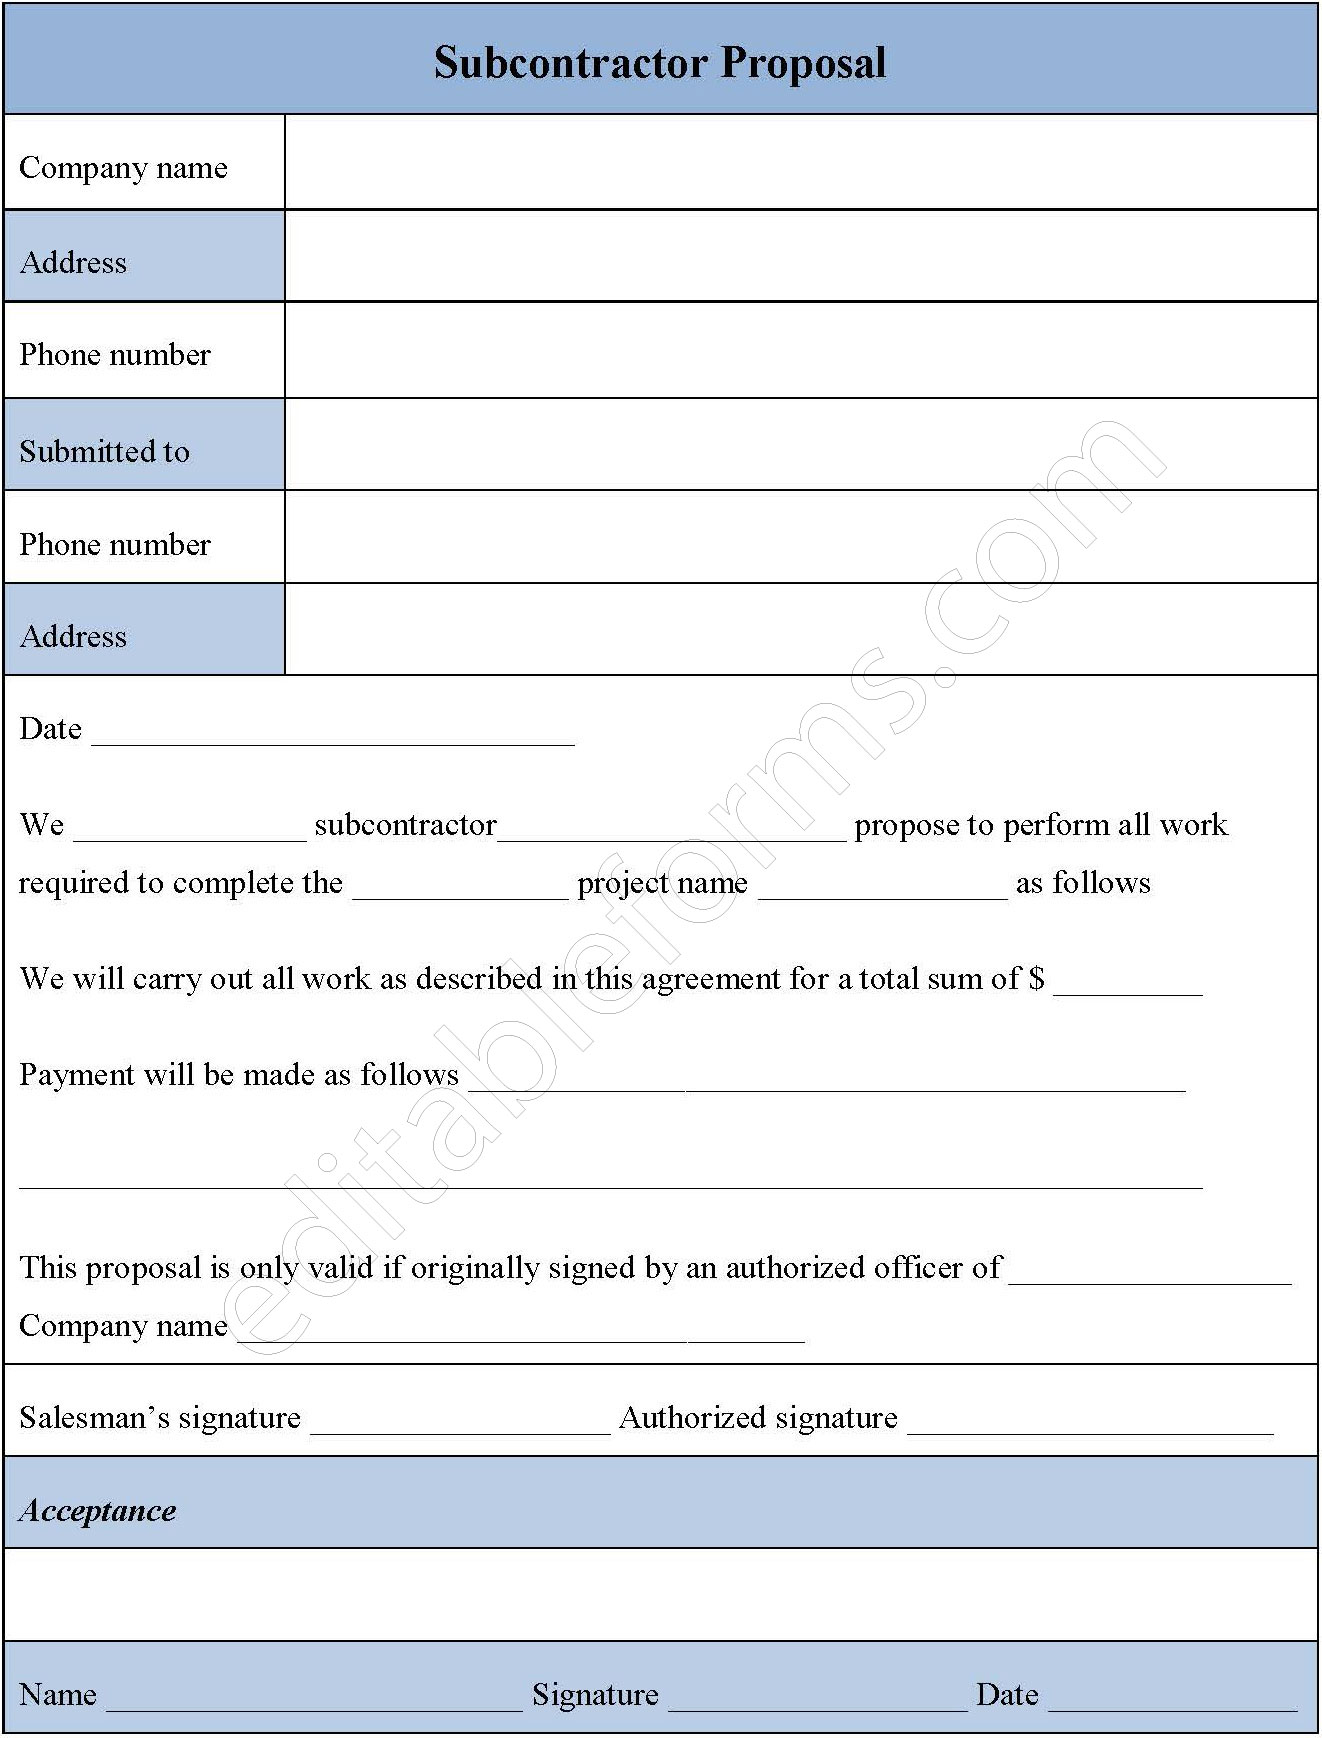 Subcontractor Proposal Form